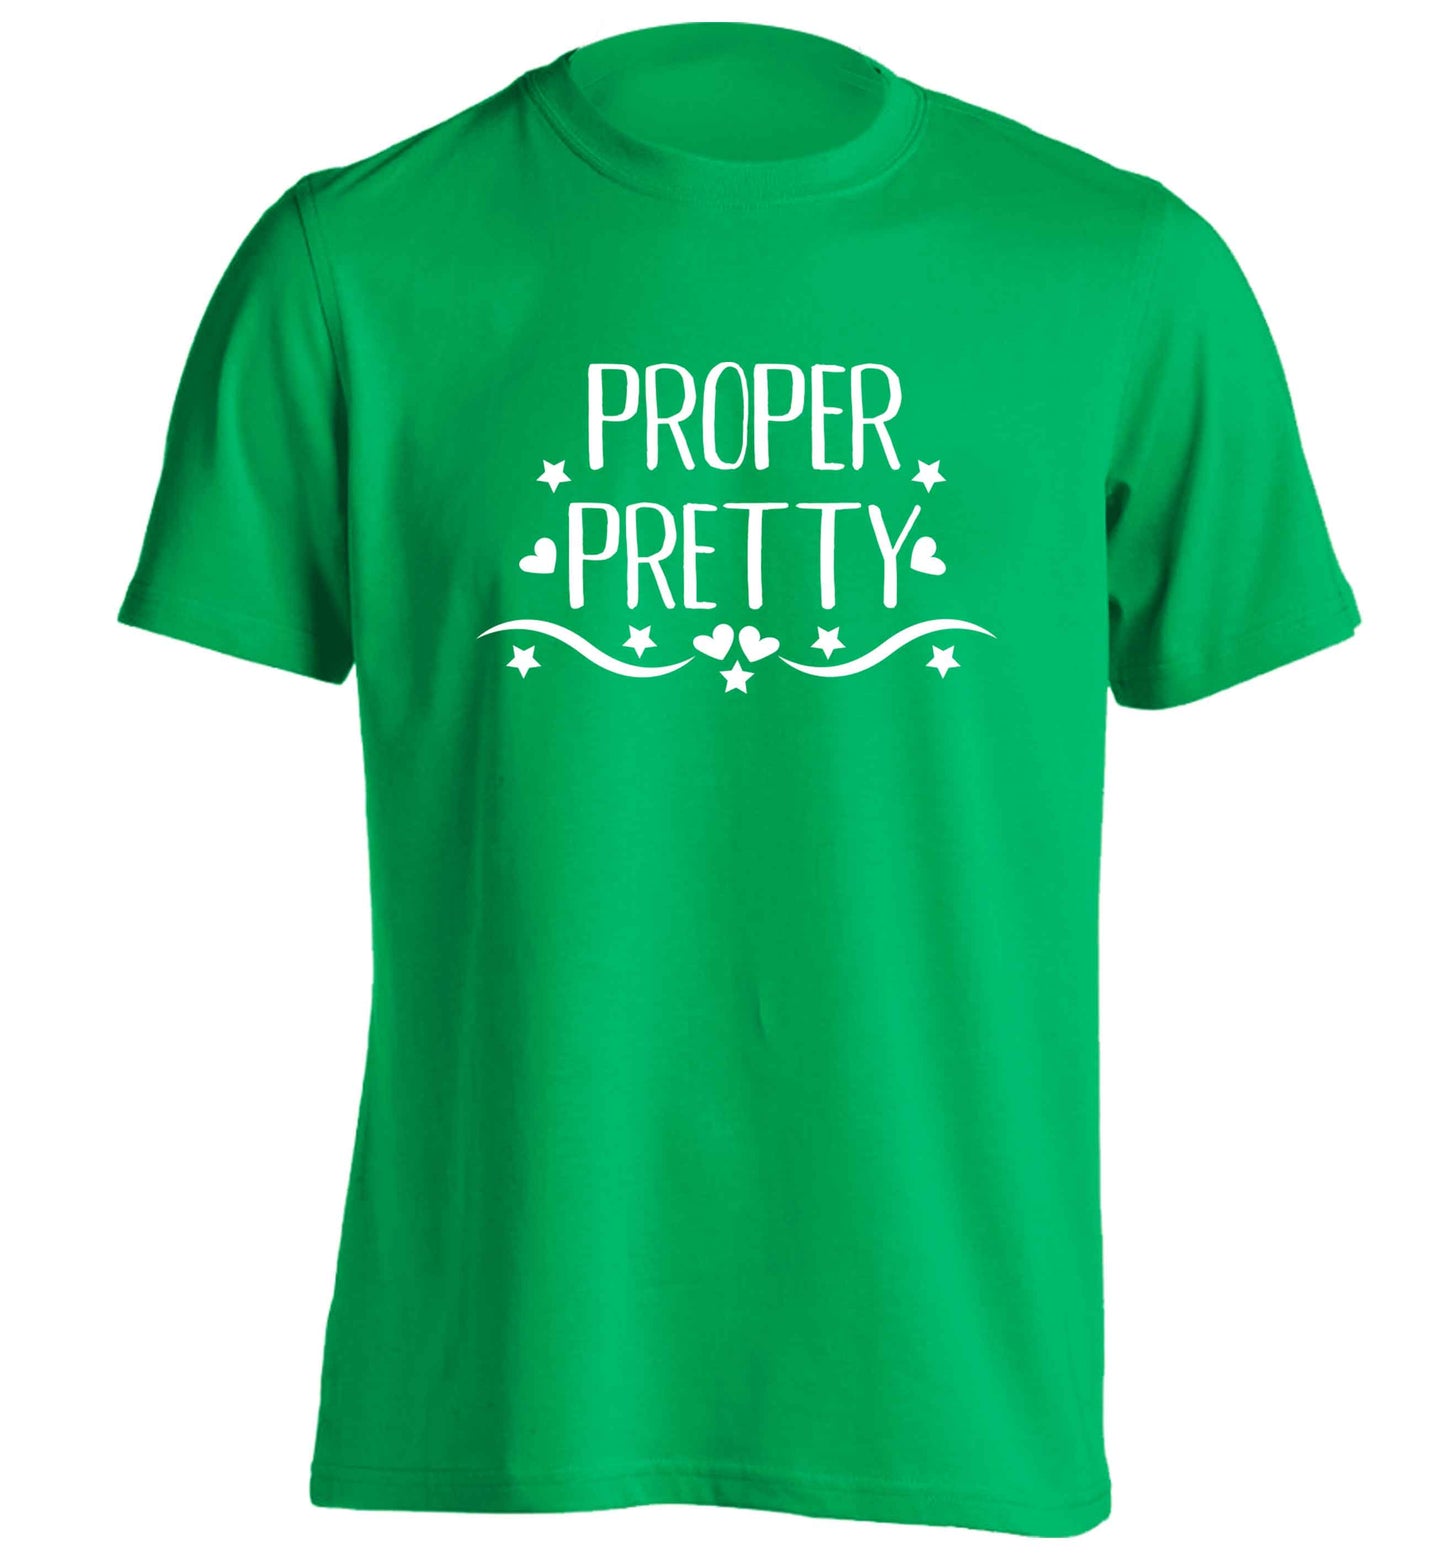 Proper pretty adults unisex green Tshirt 2XL